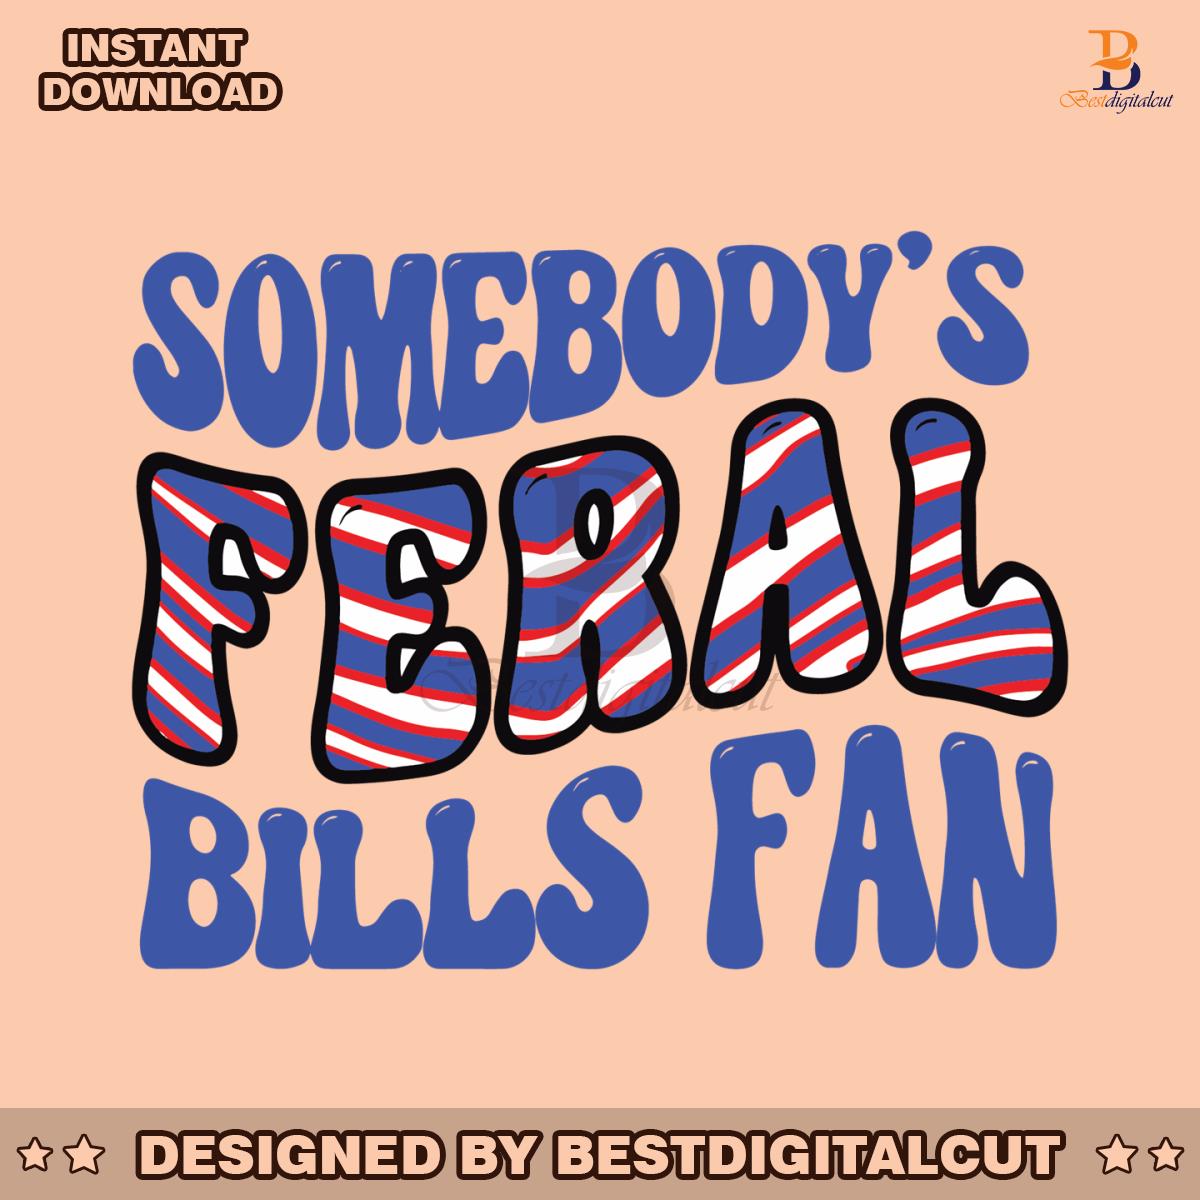 somebodys-feral-bills-fan-football-svg